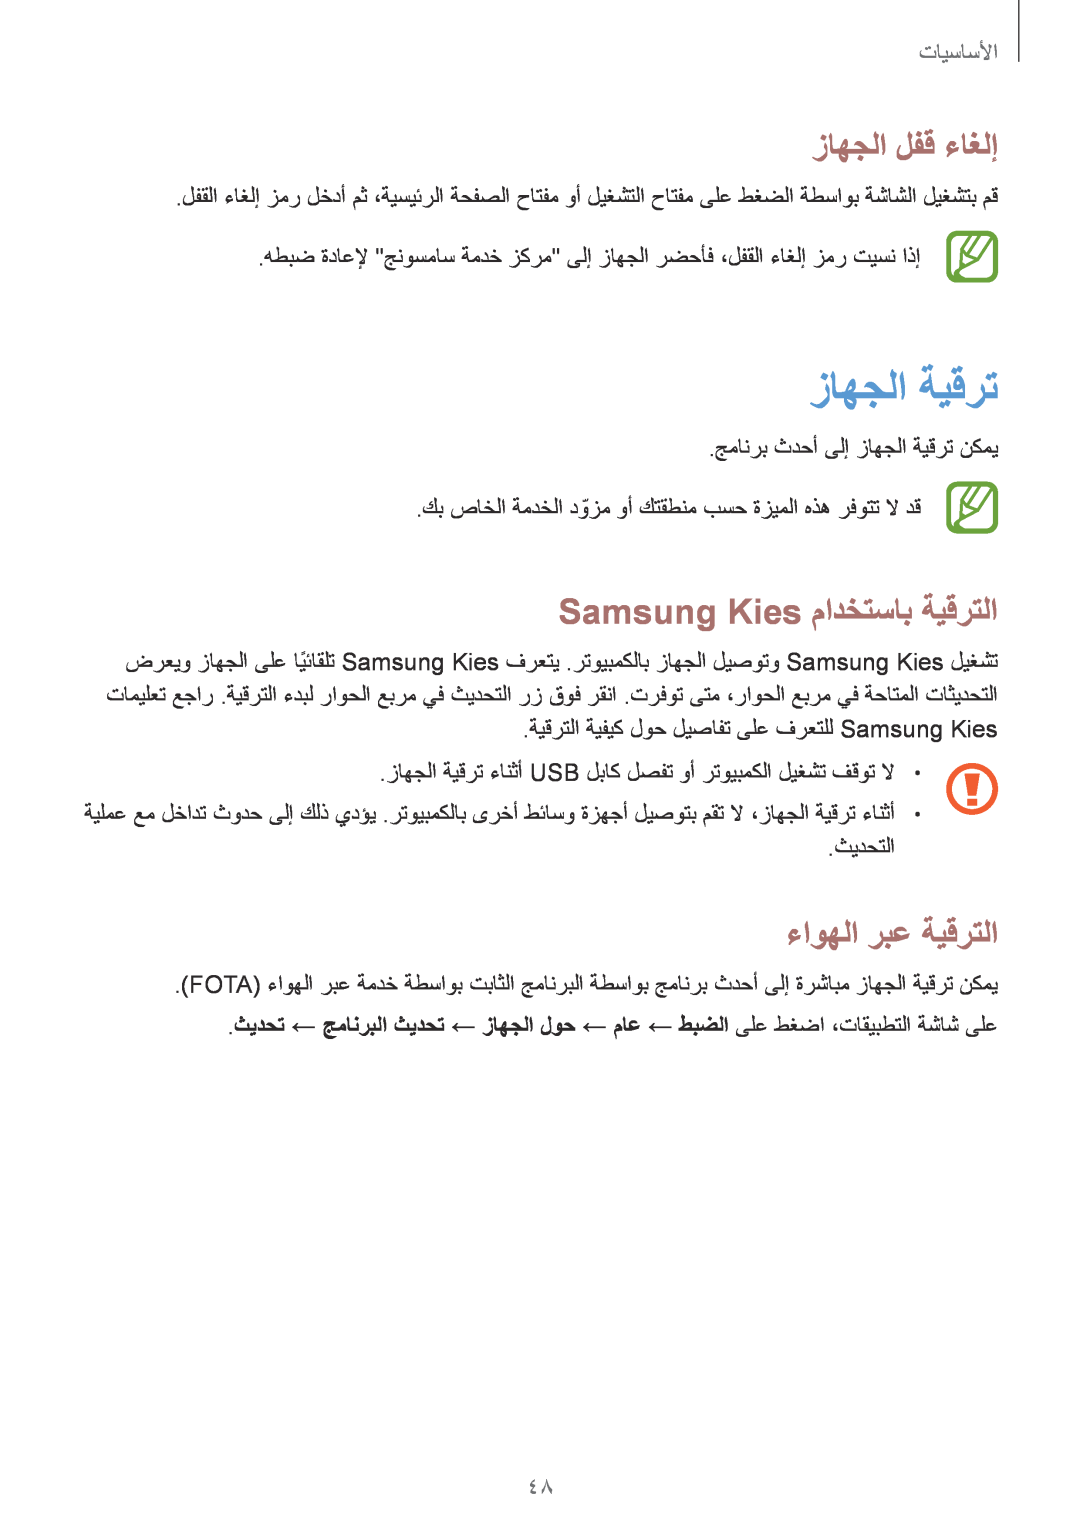 Samsung SM-T320NZKAKSA manual زاهجلا ةيقرت, زاهجلا لفق ءاغلإ, Samsung Kies مادختساب ةيقرتلا, ءاوهلا ربع ةيقرتلا, الأساسيأا 